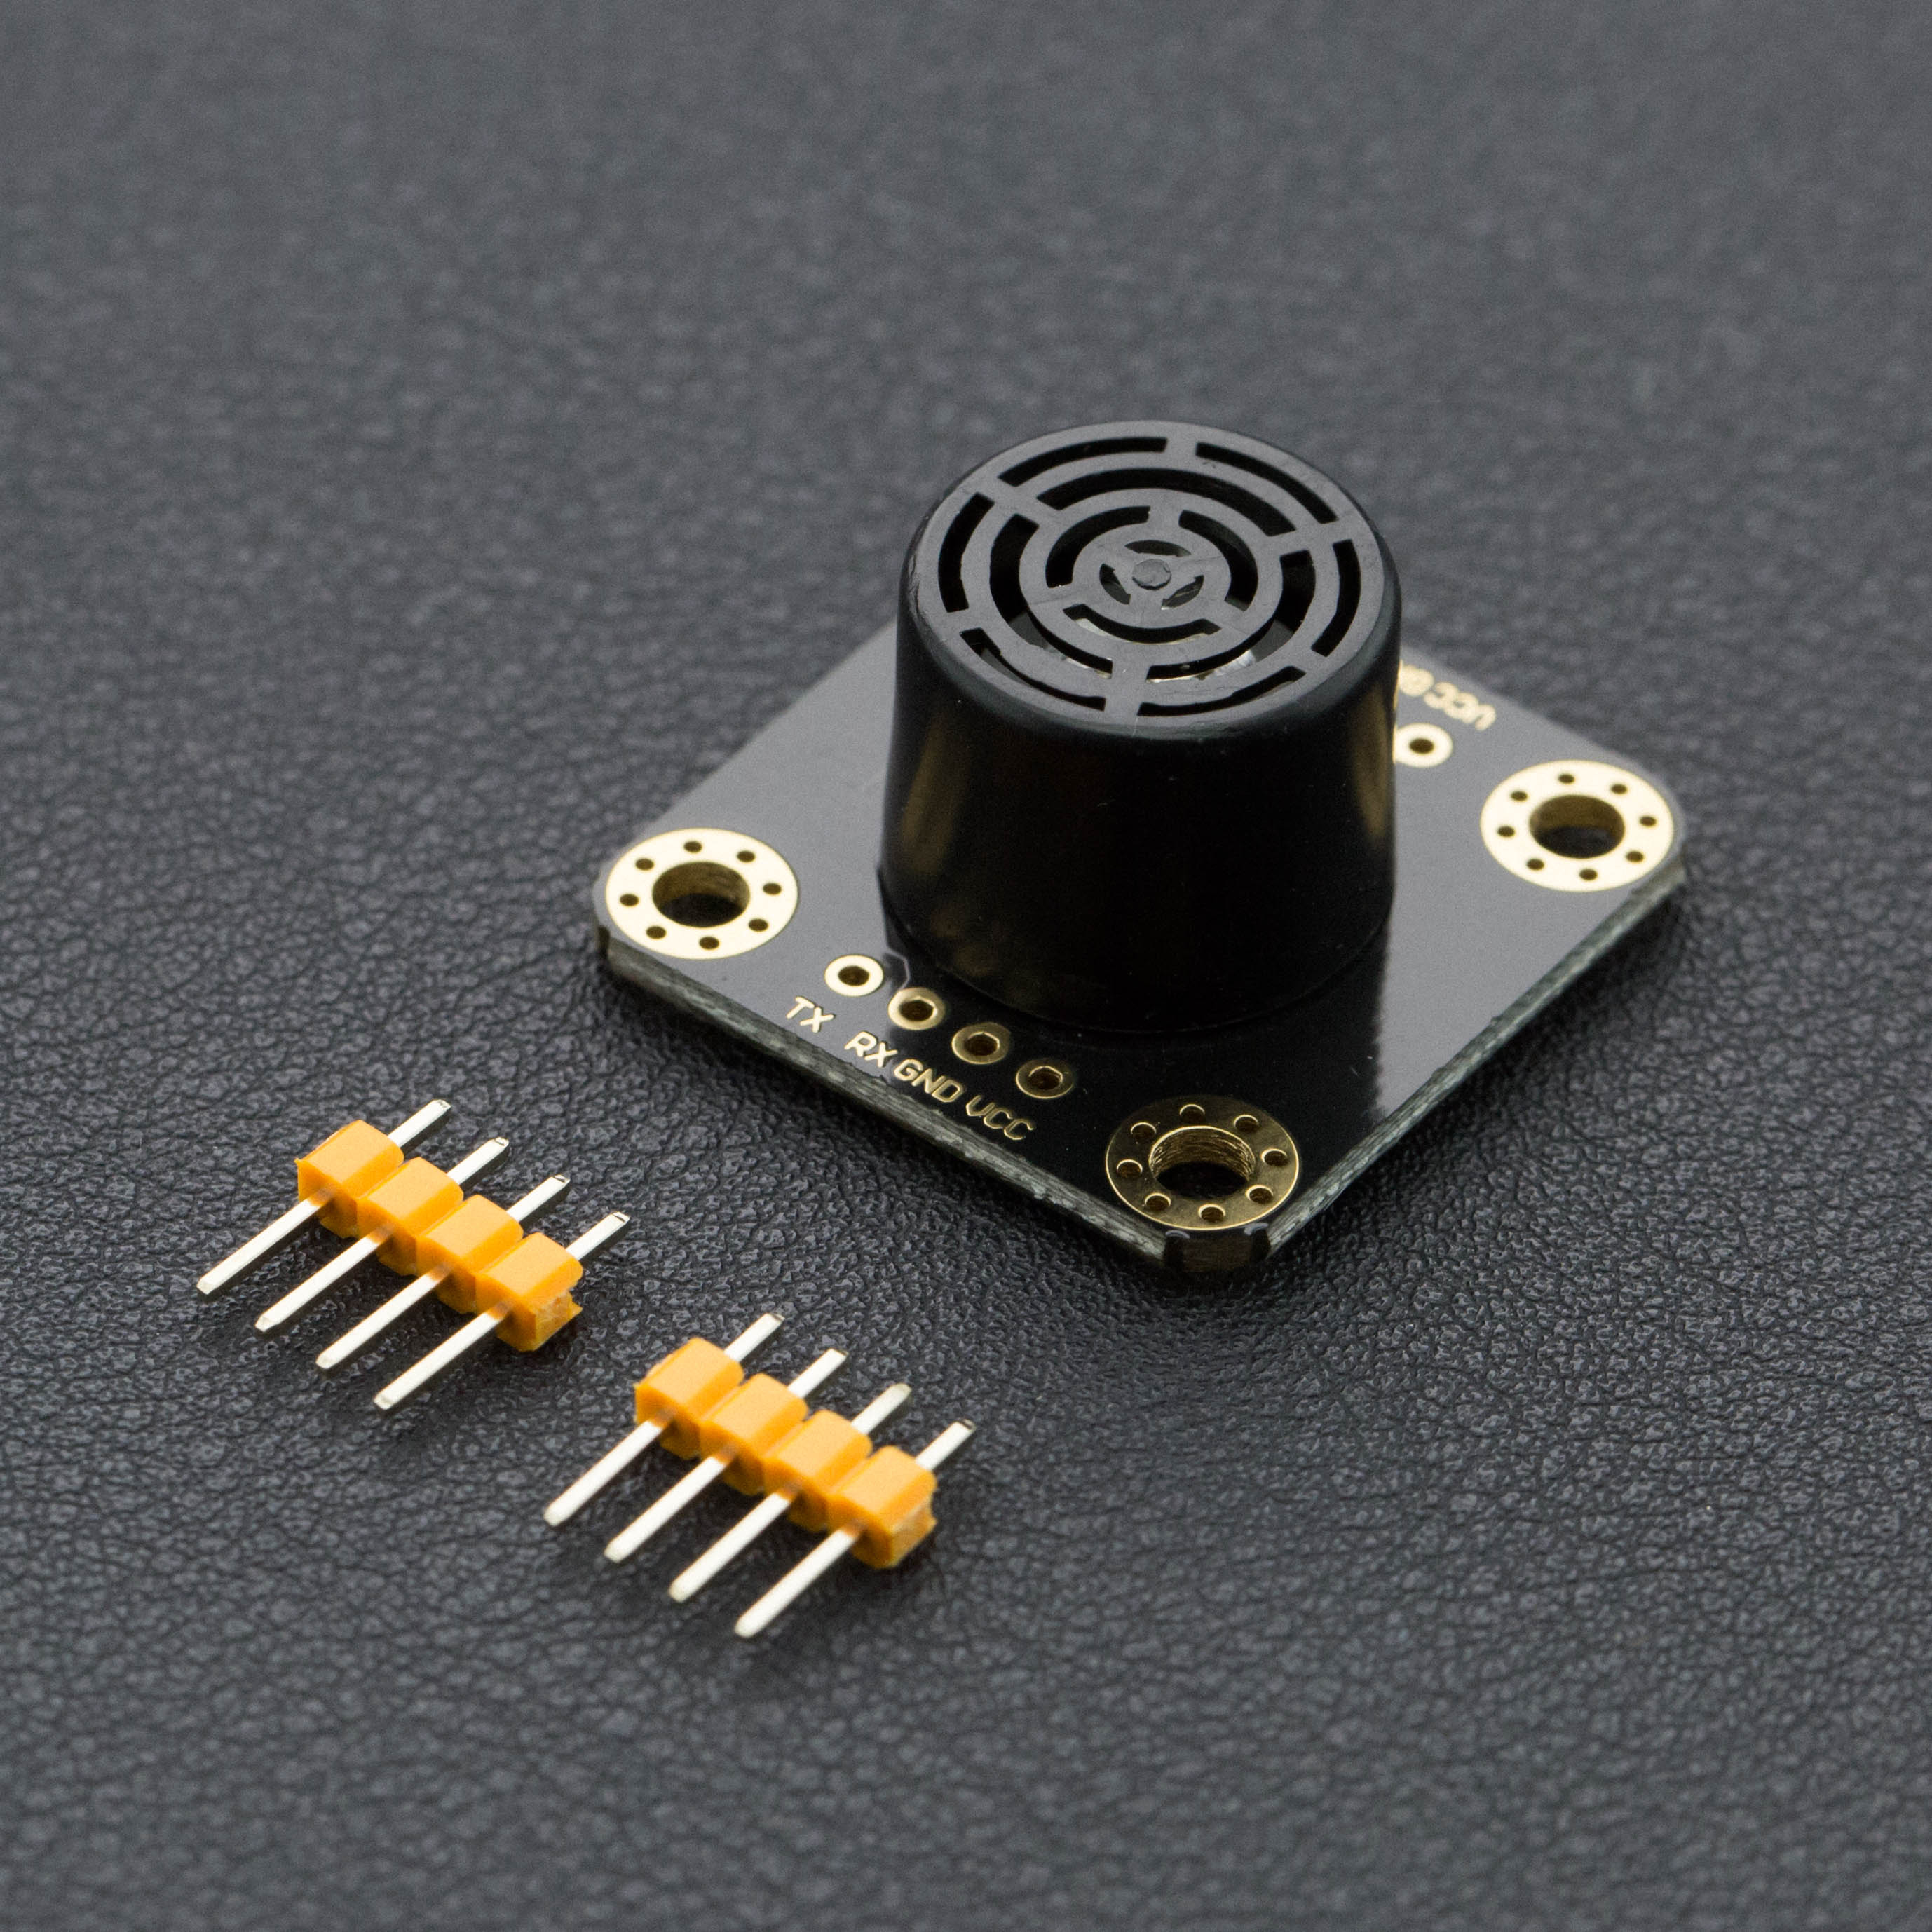 mount frc ultrasonic sensor